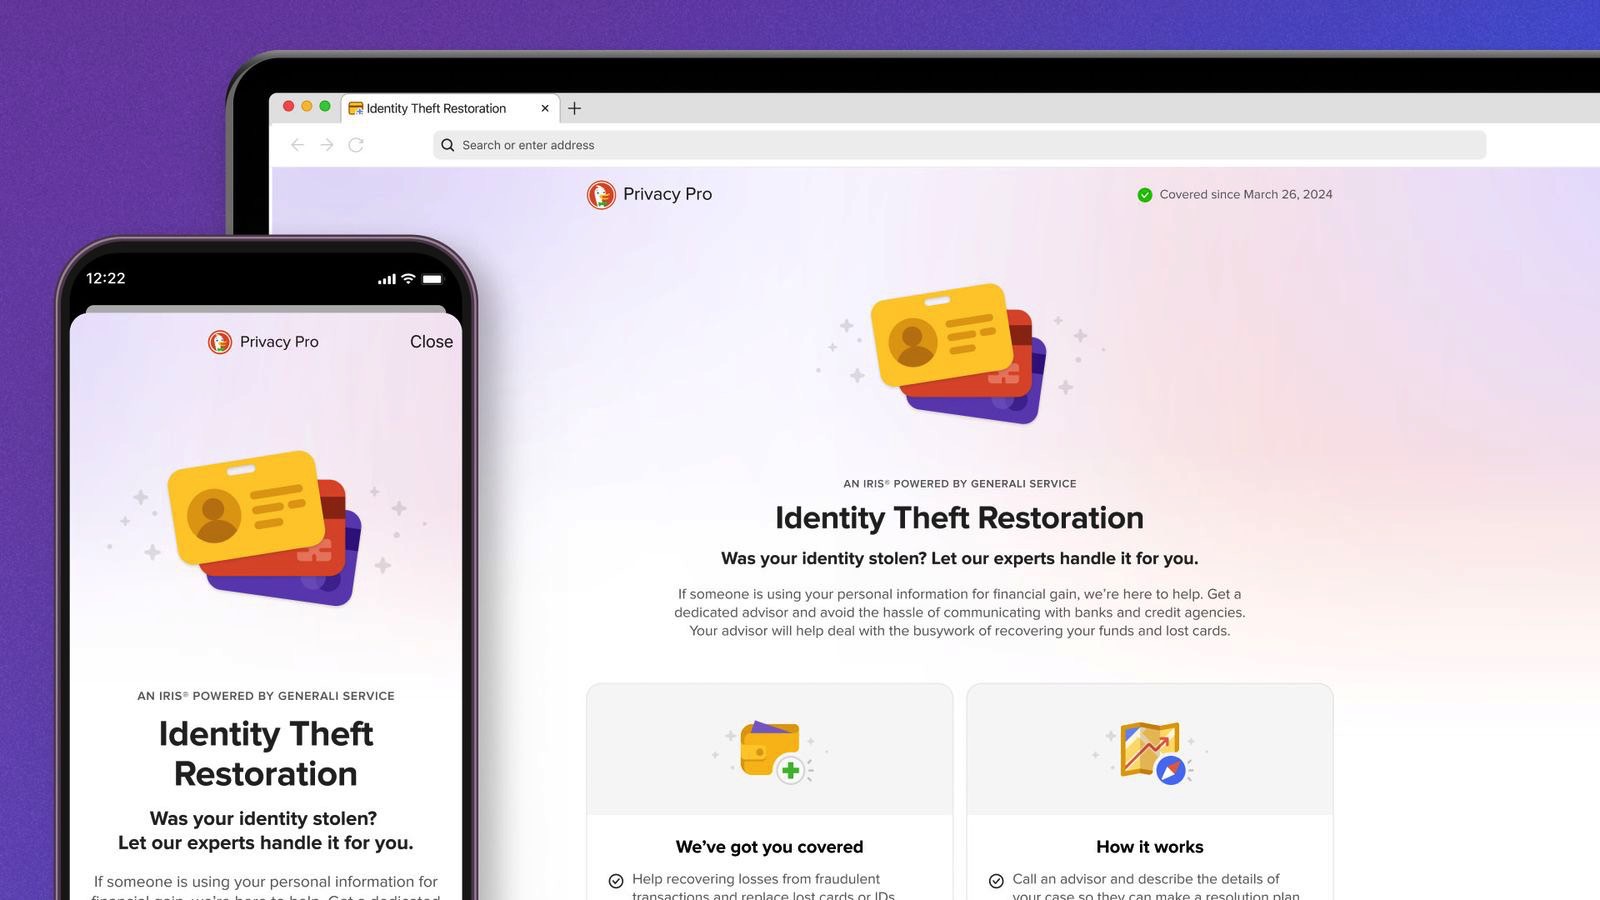 DuckDuckGo Privacy Pro: The Identity Theft Restoration tool.